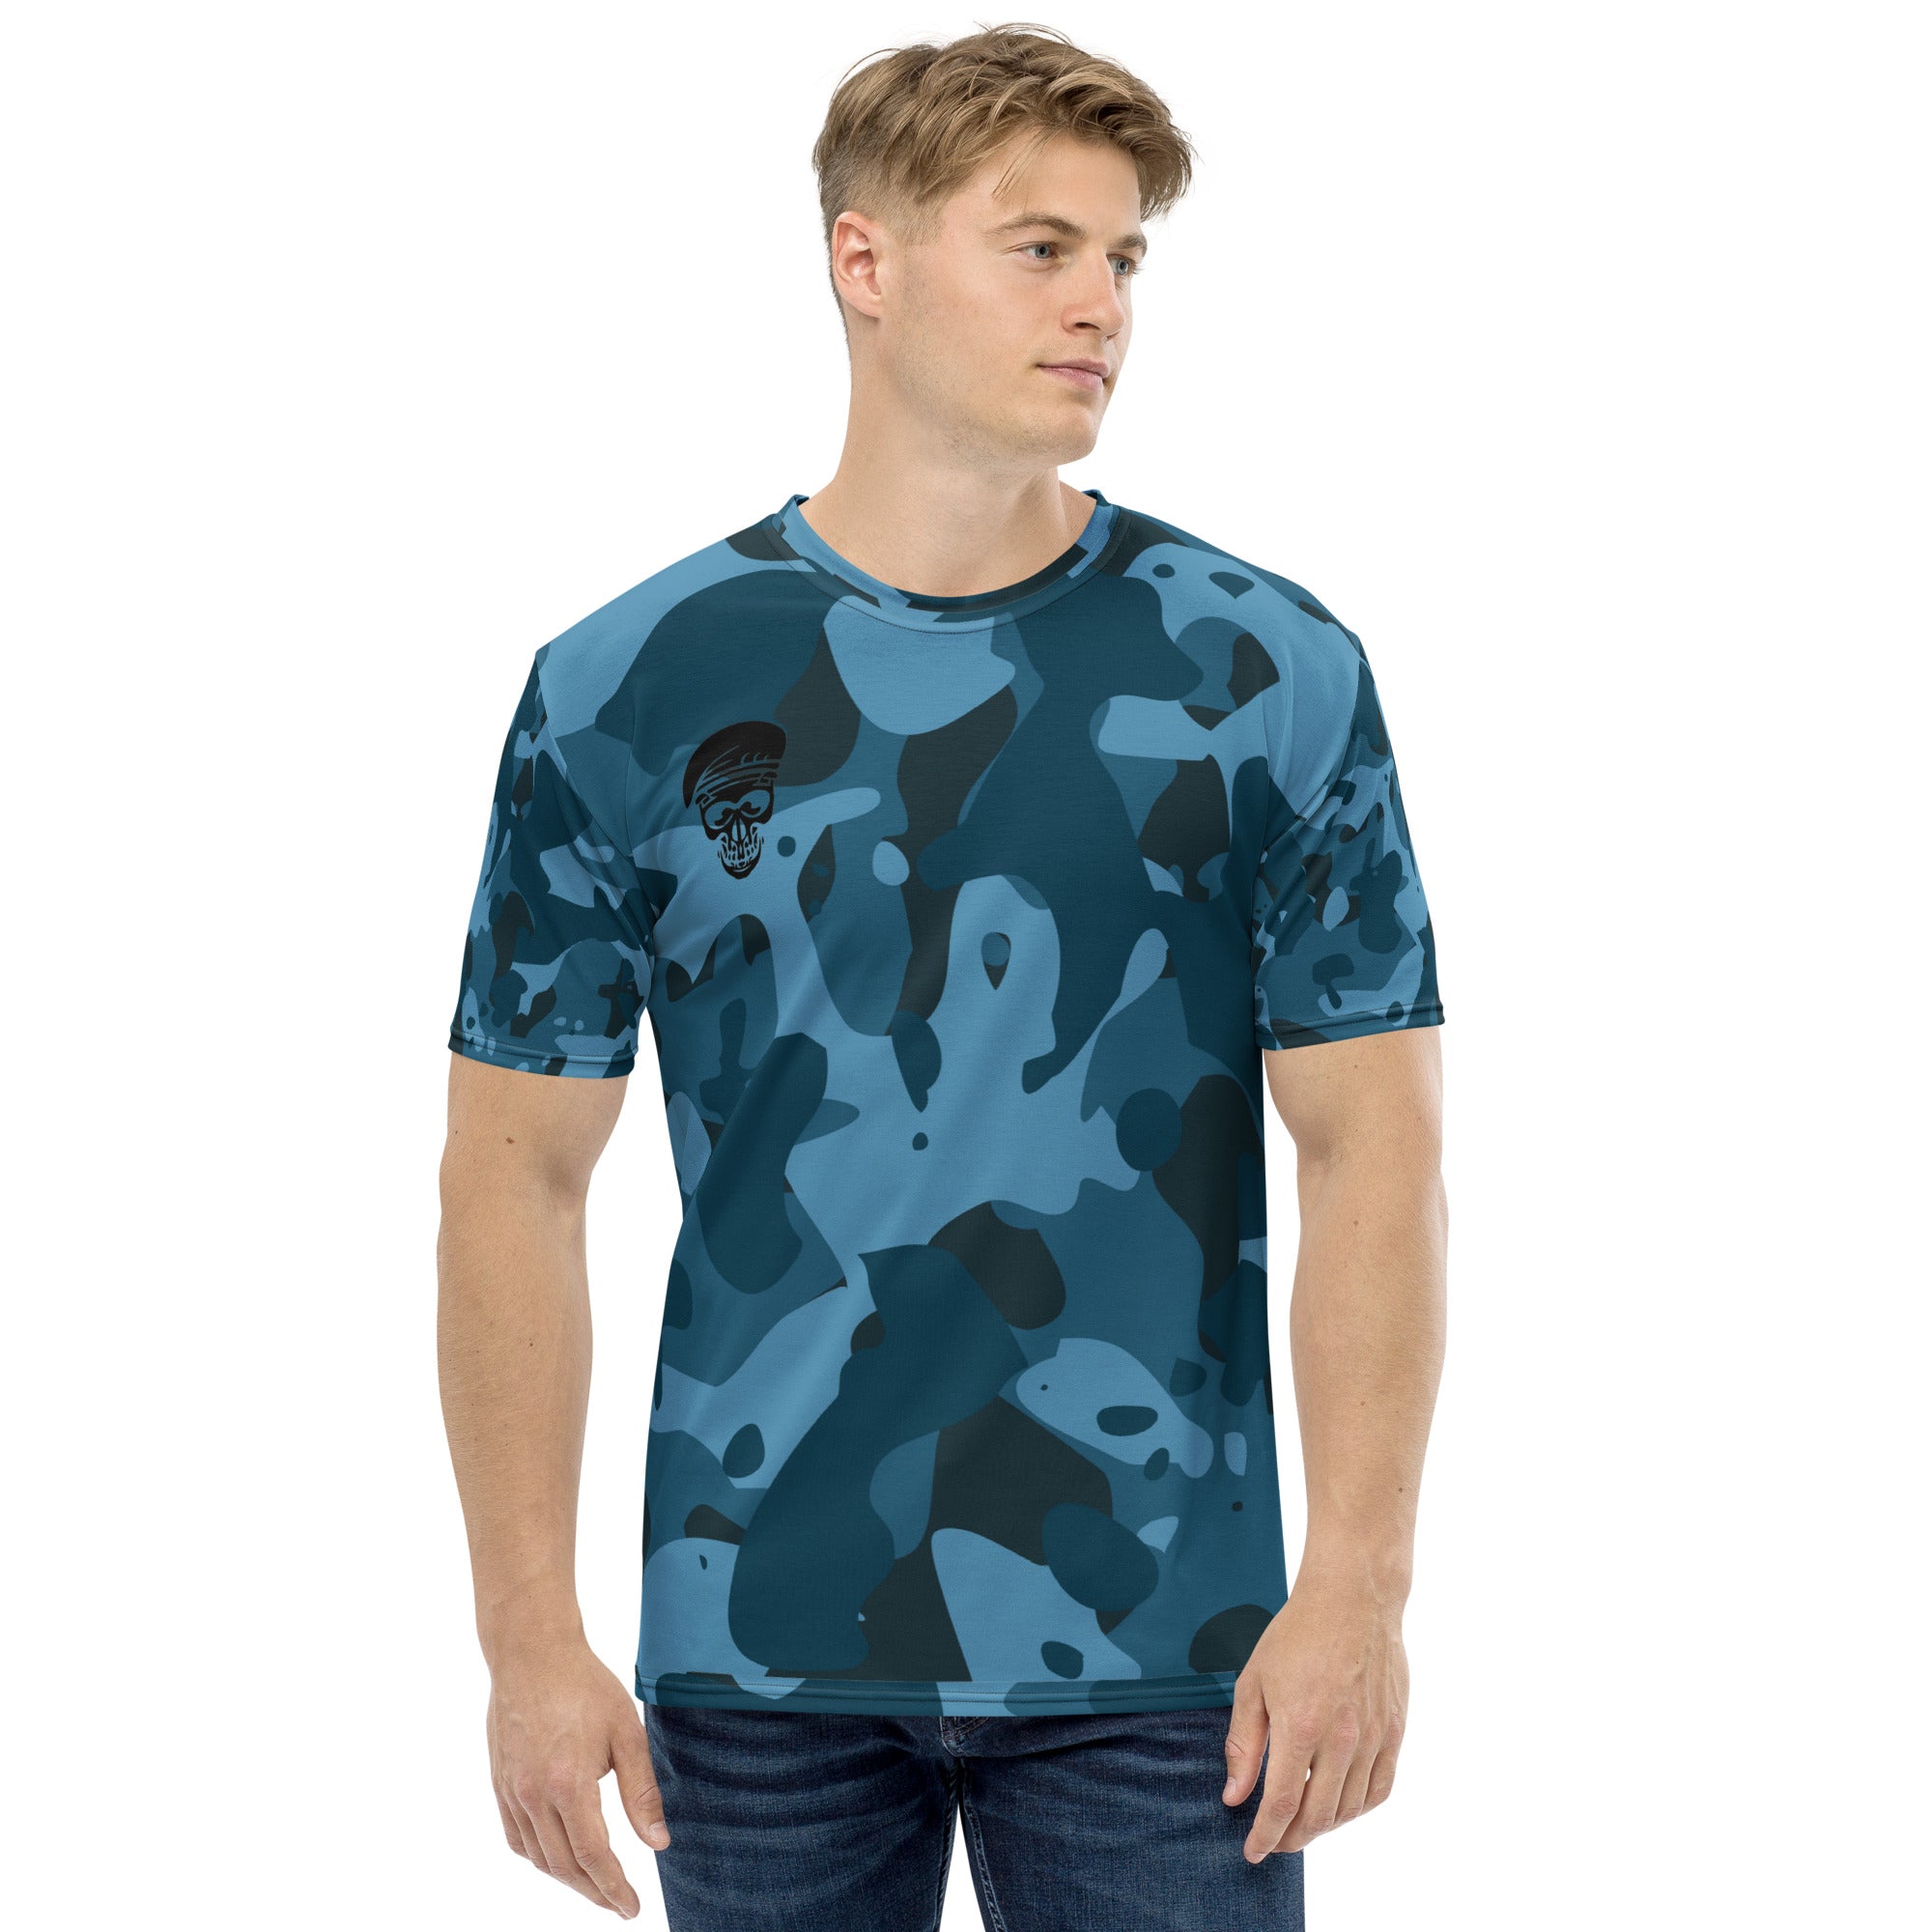 Men's On Duty Skull Printed Camo T-Shirt